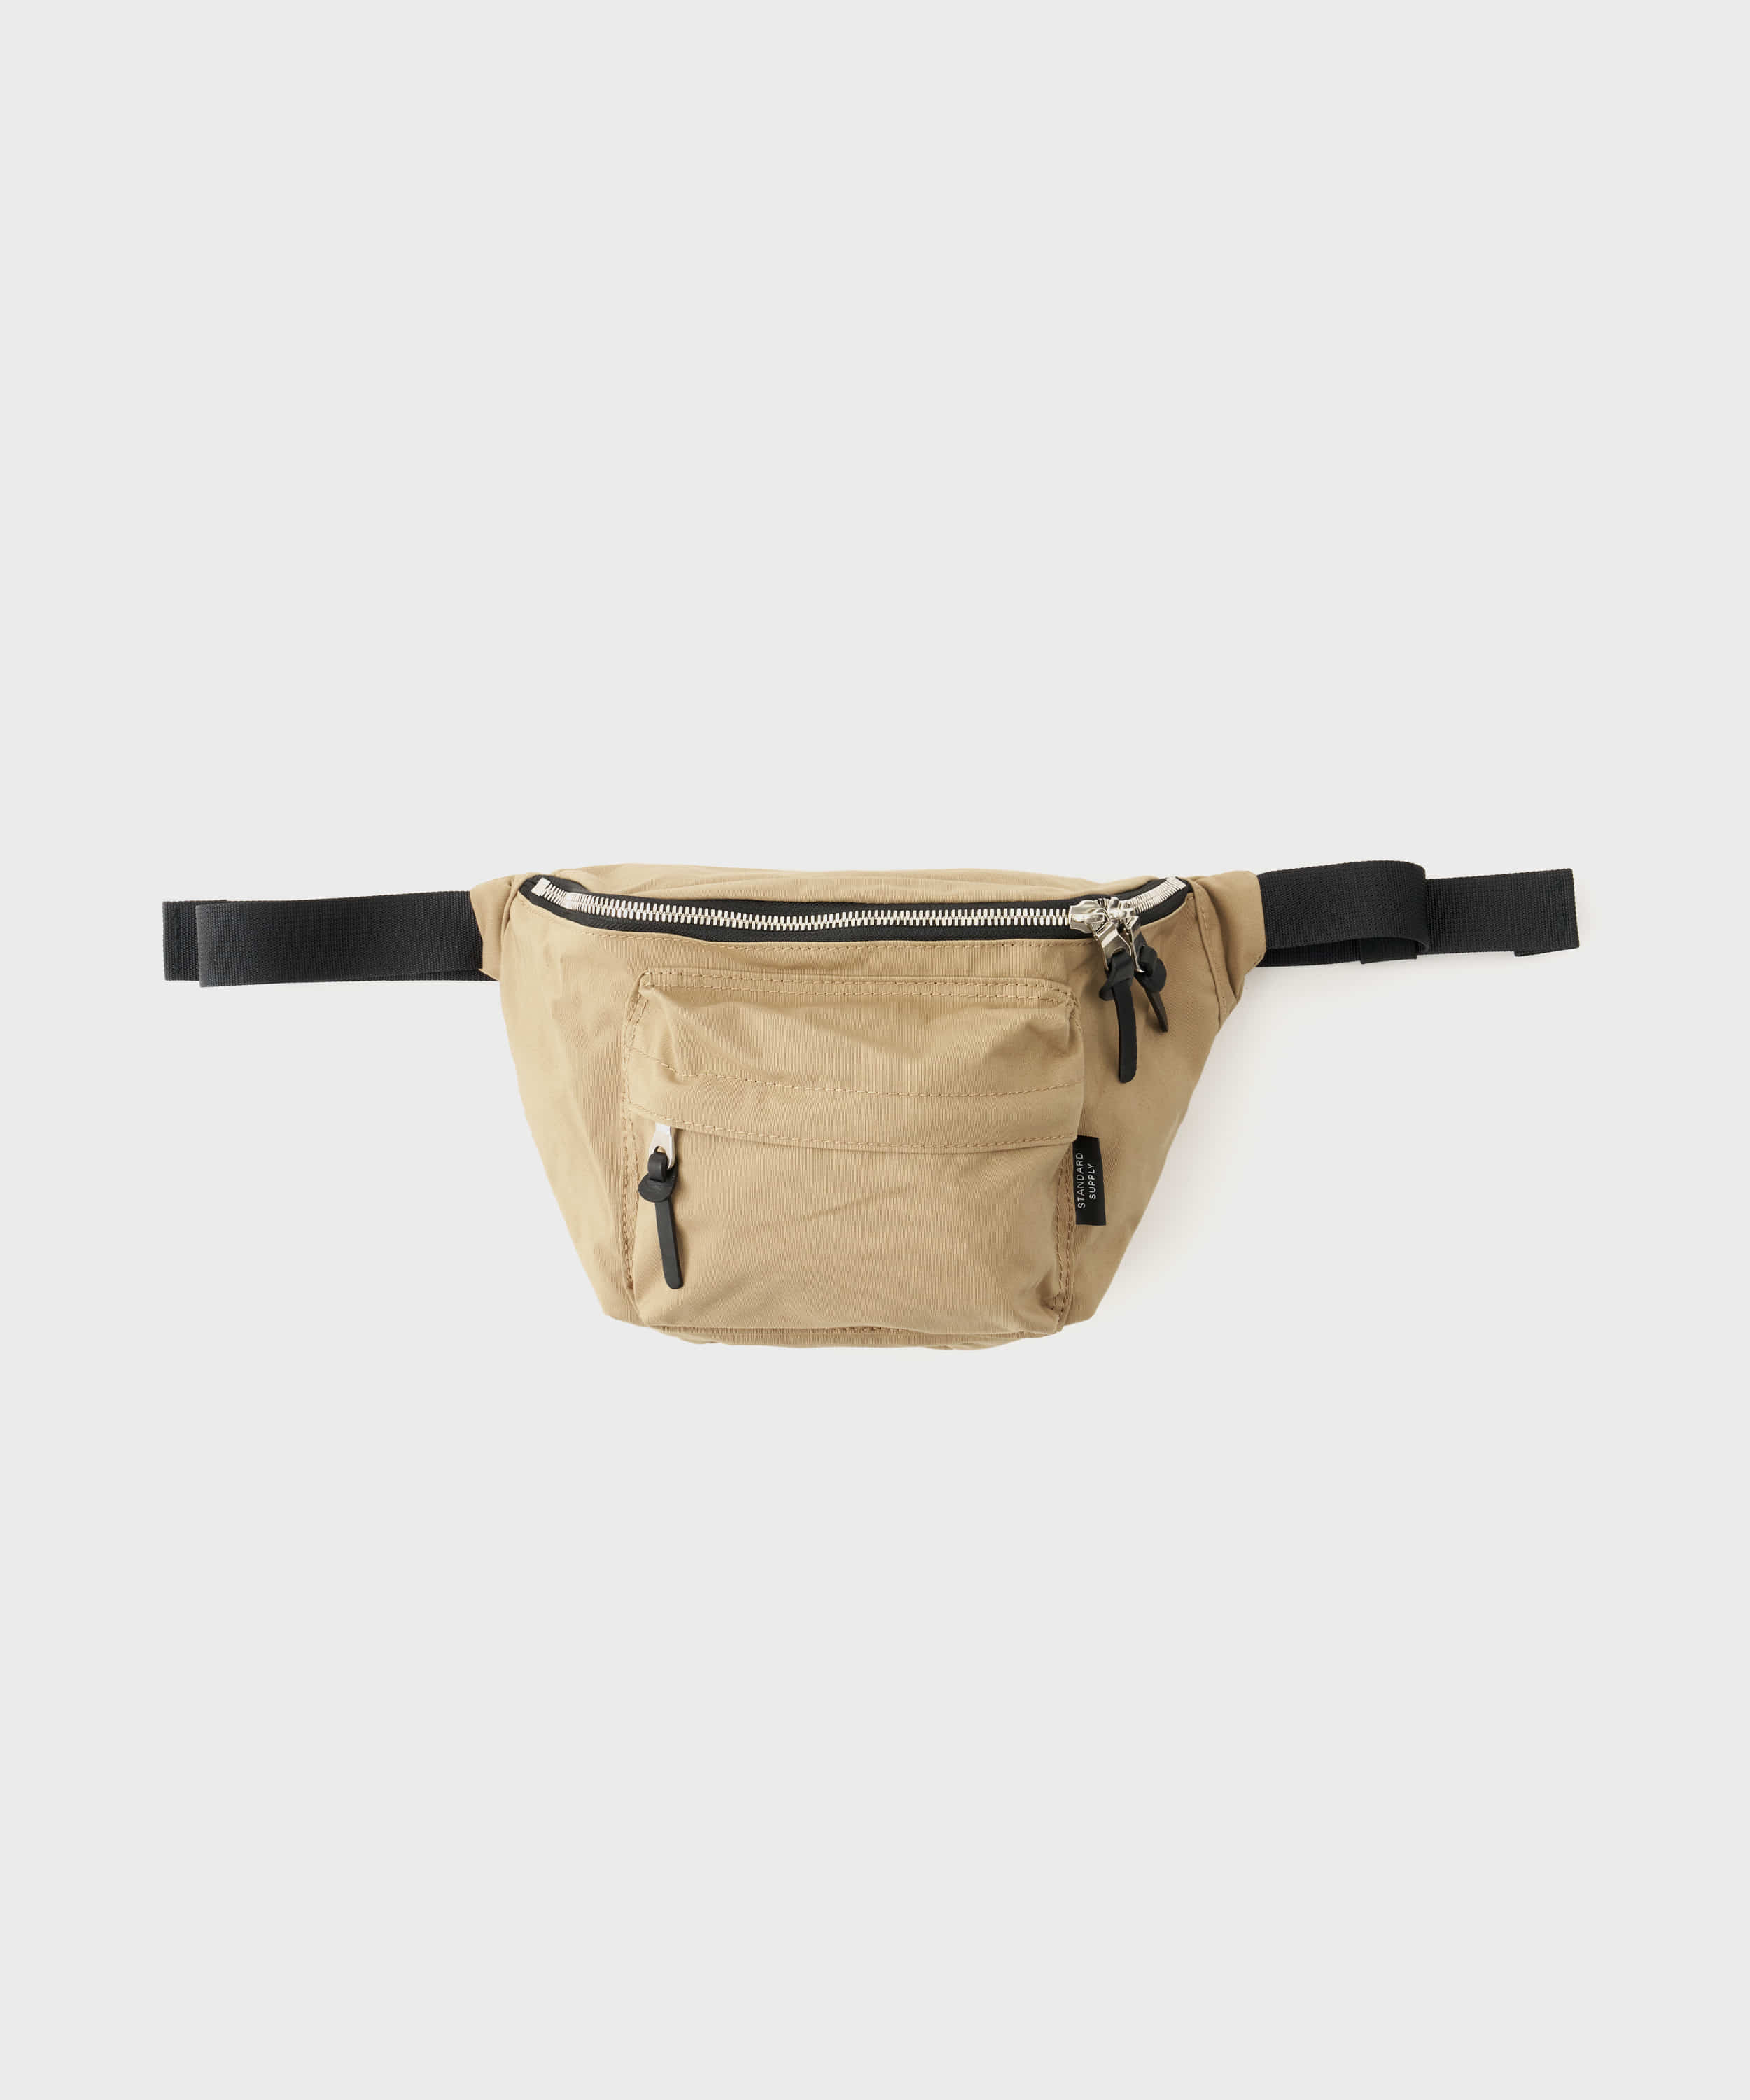 Simplicity Bum Bag (Sand Beige)